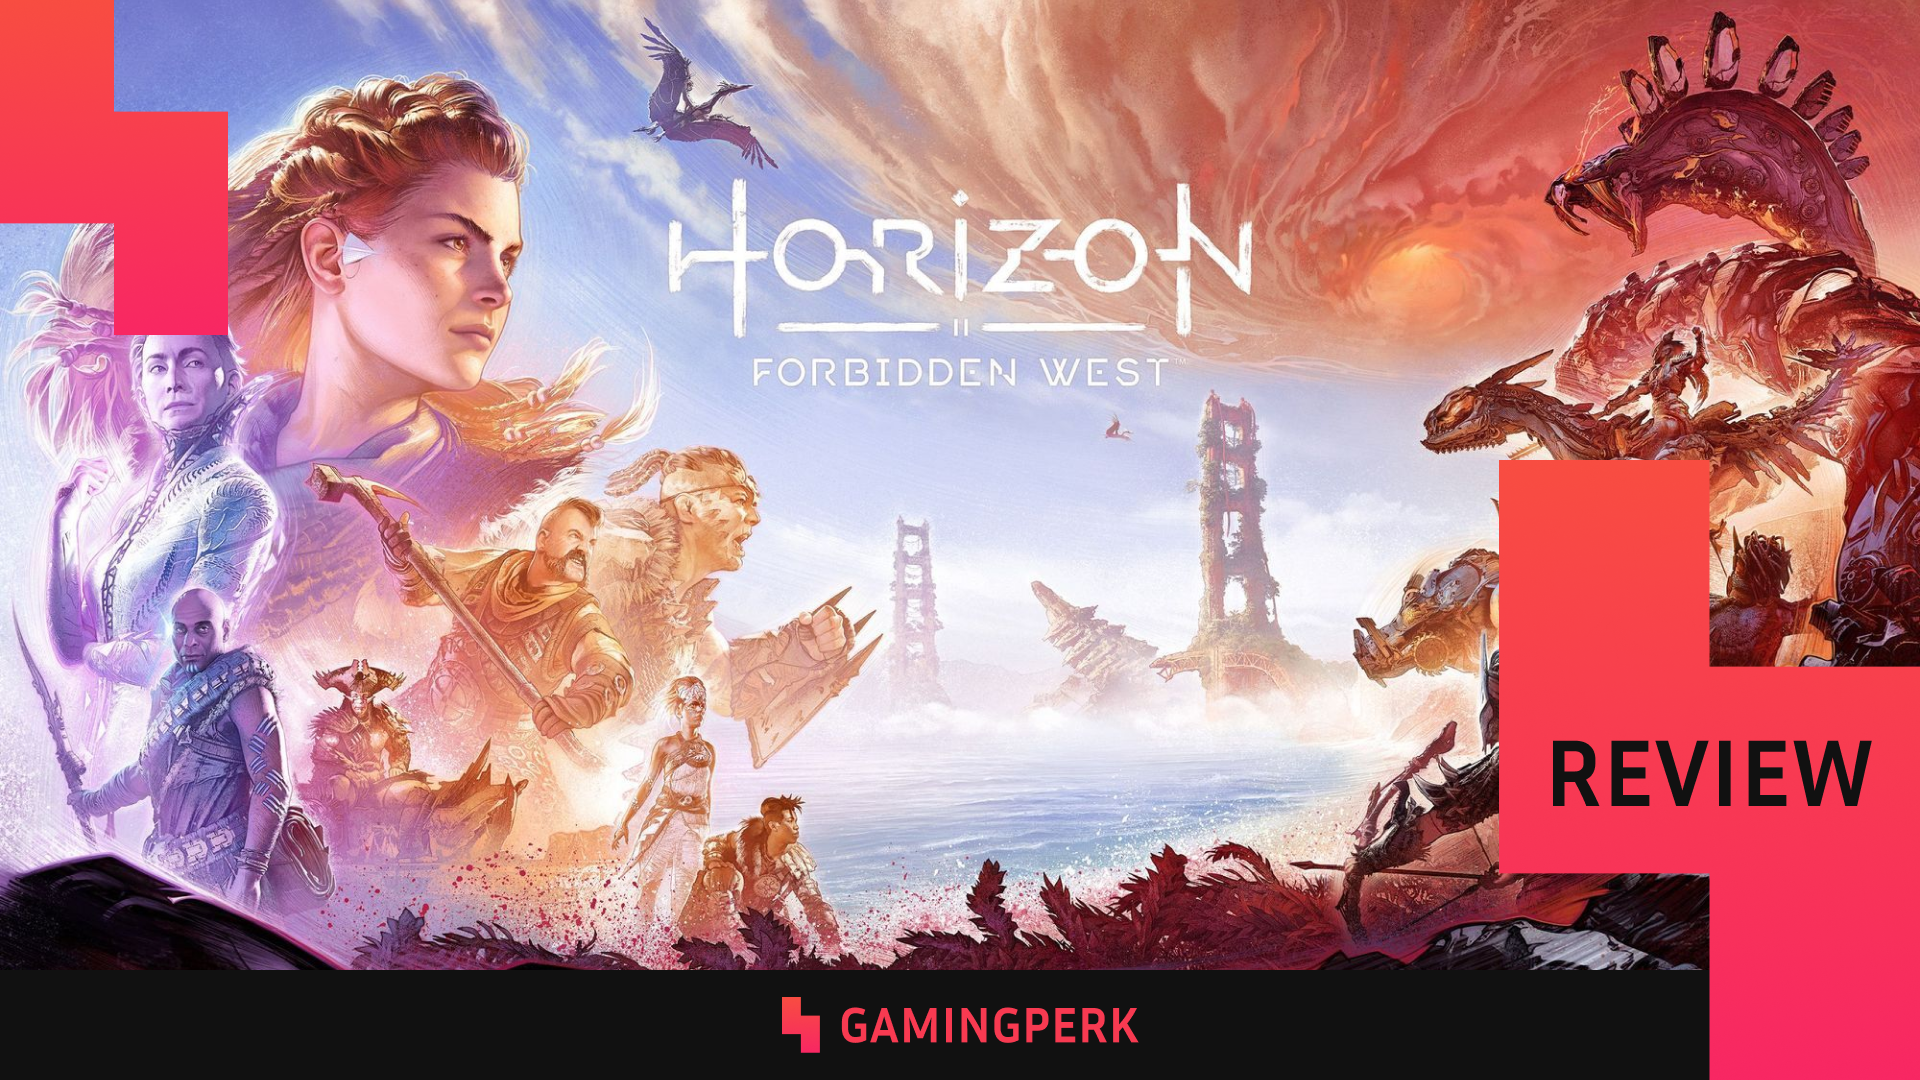 Horizon Forbidden West - Meet the new adventure on PC!